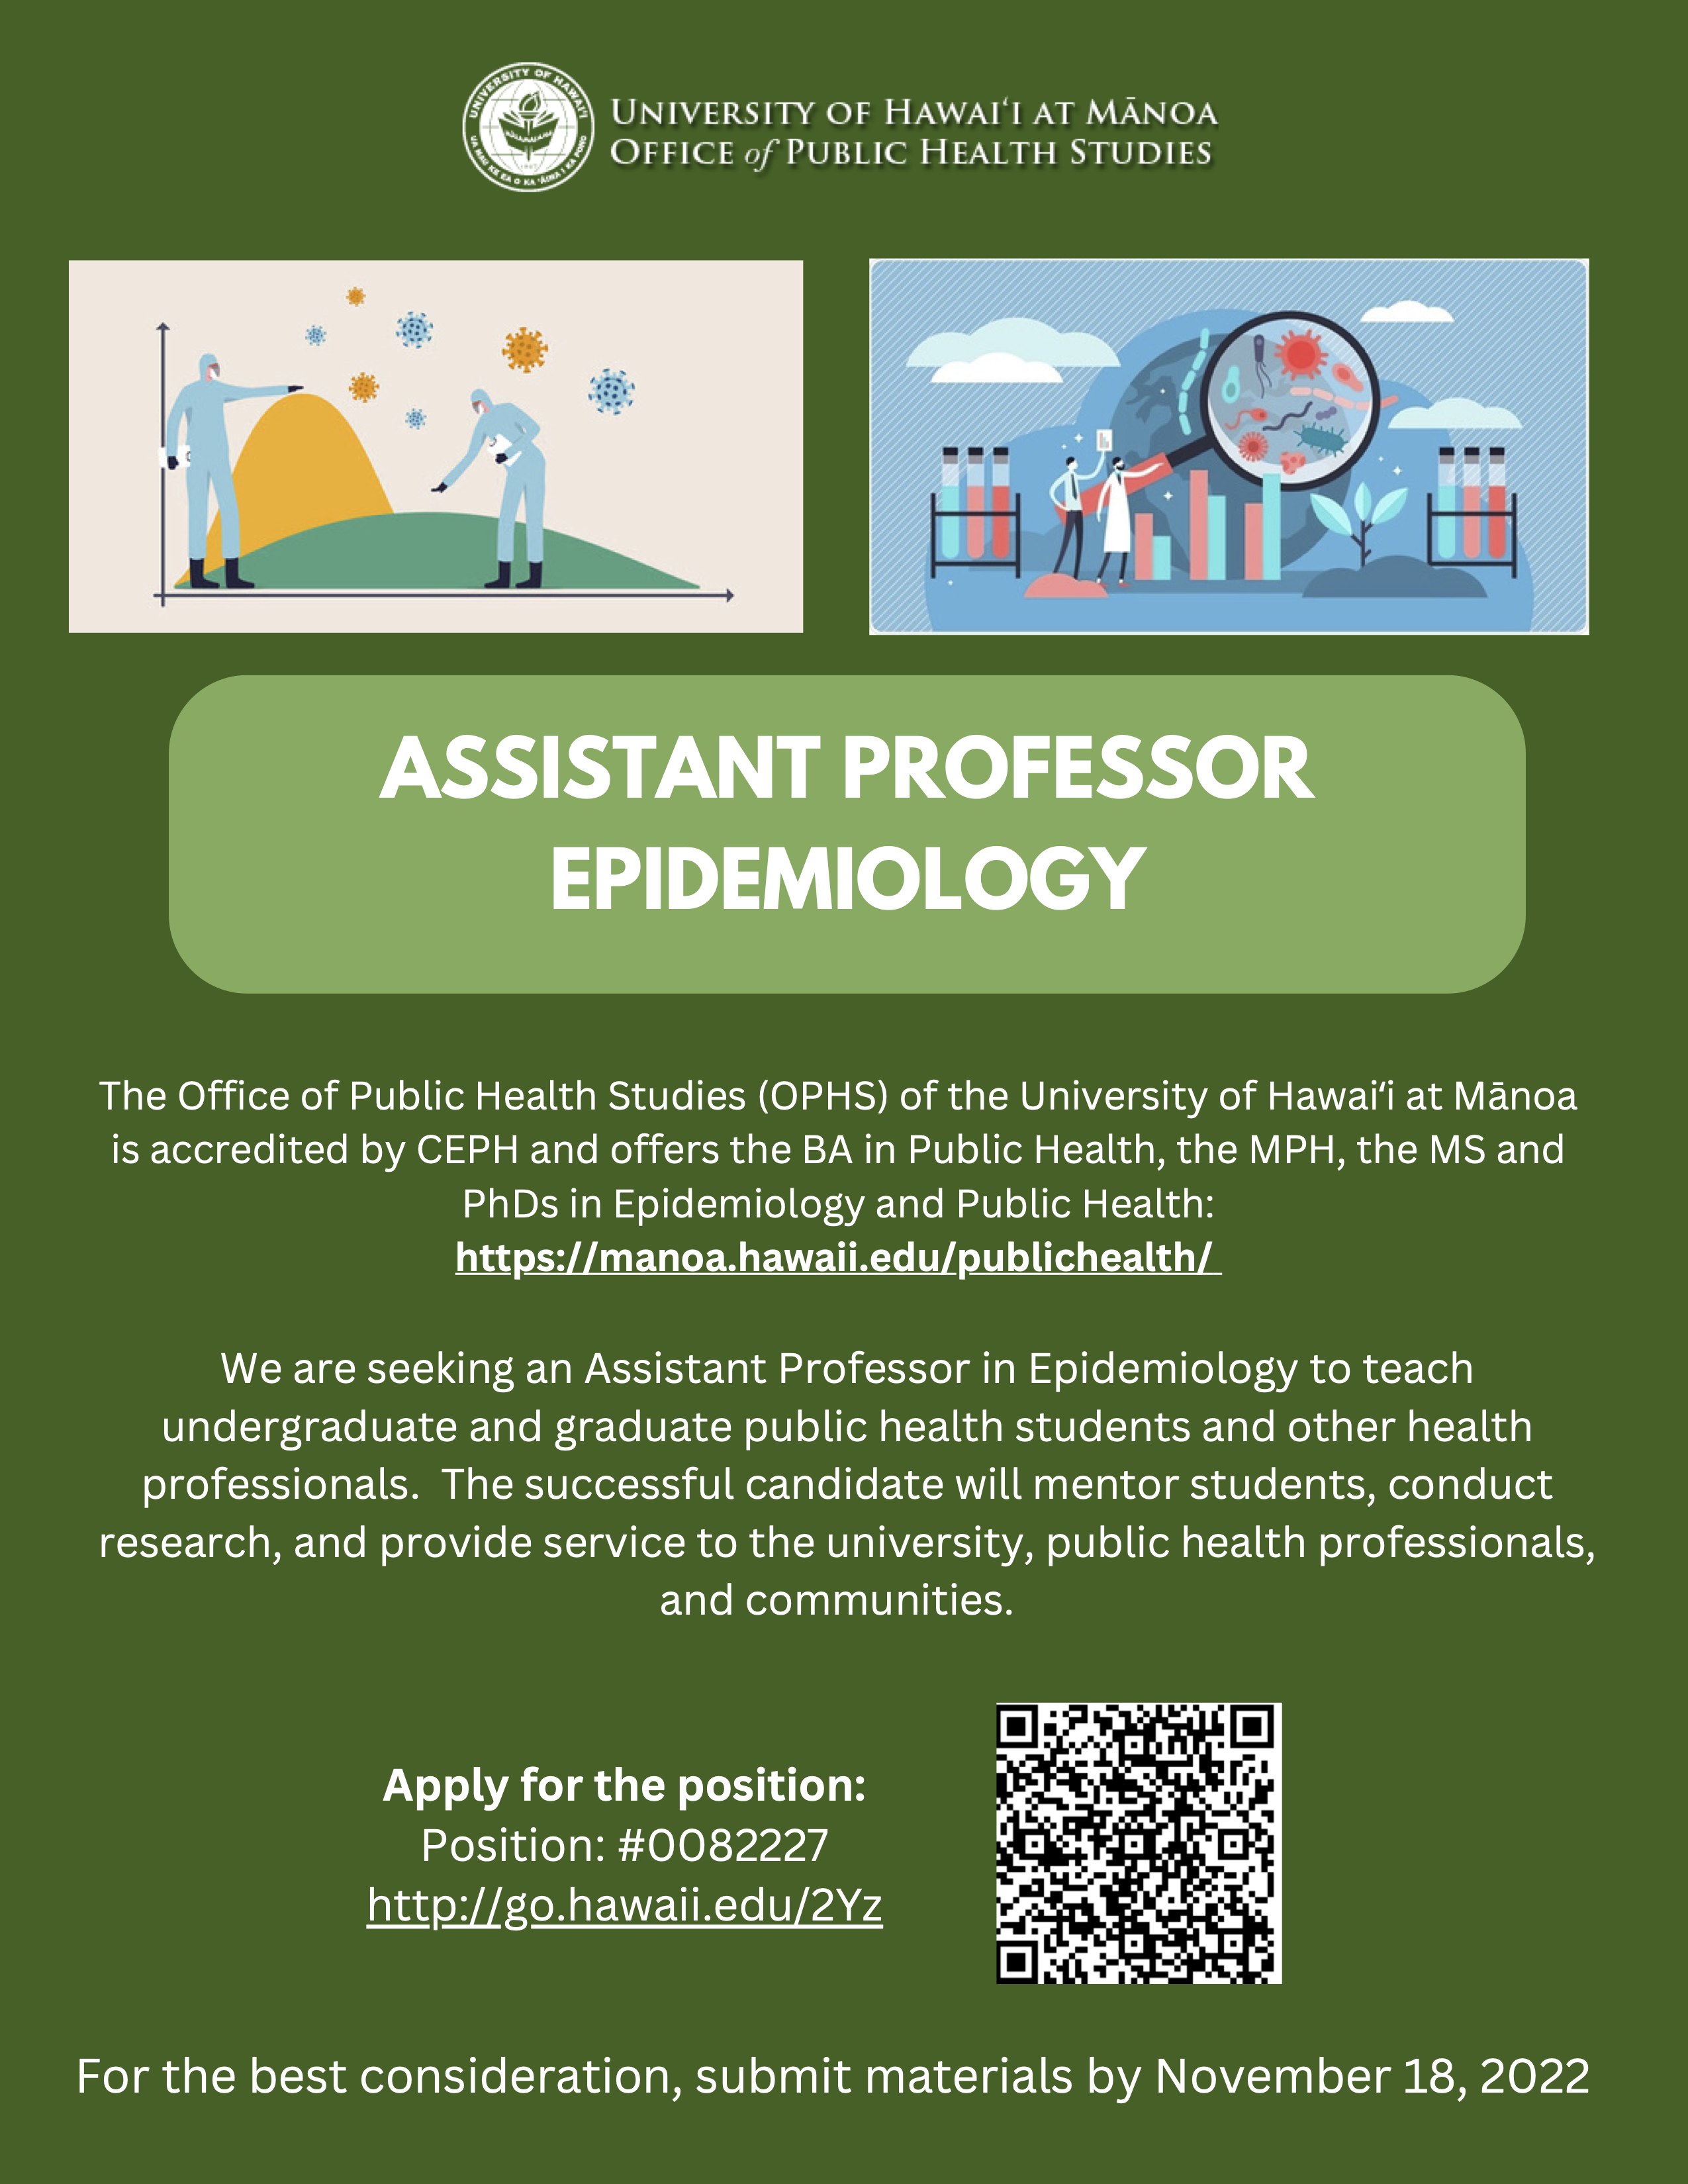 Assistant Professor in Epidemiology flyer